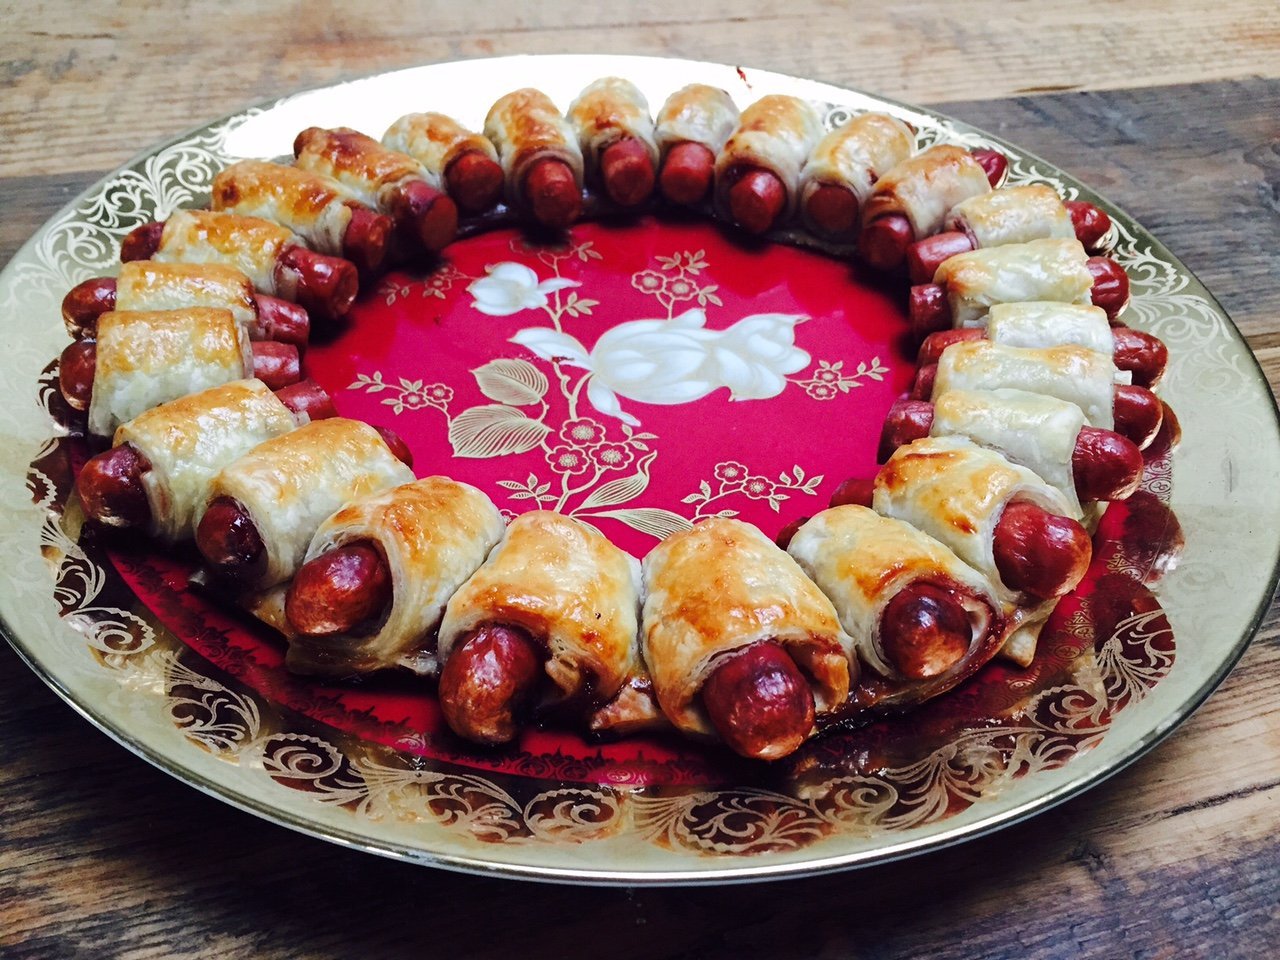 Hotdog kerstkrans recept receptblog Foodinista kidsfood partyfood